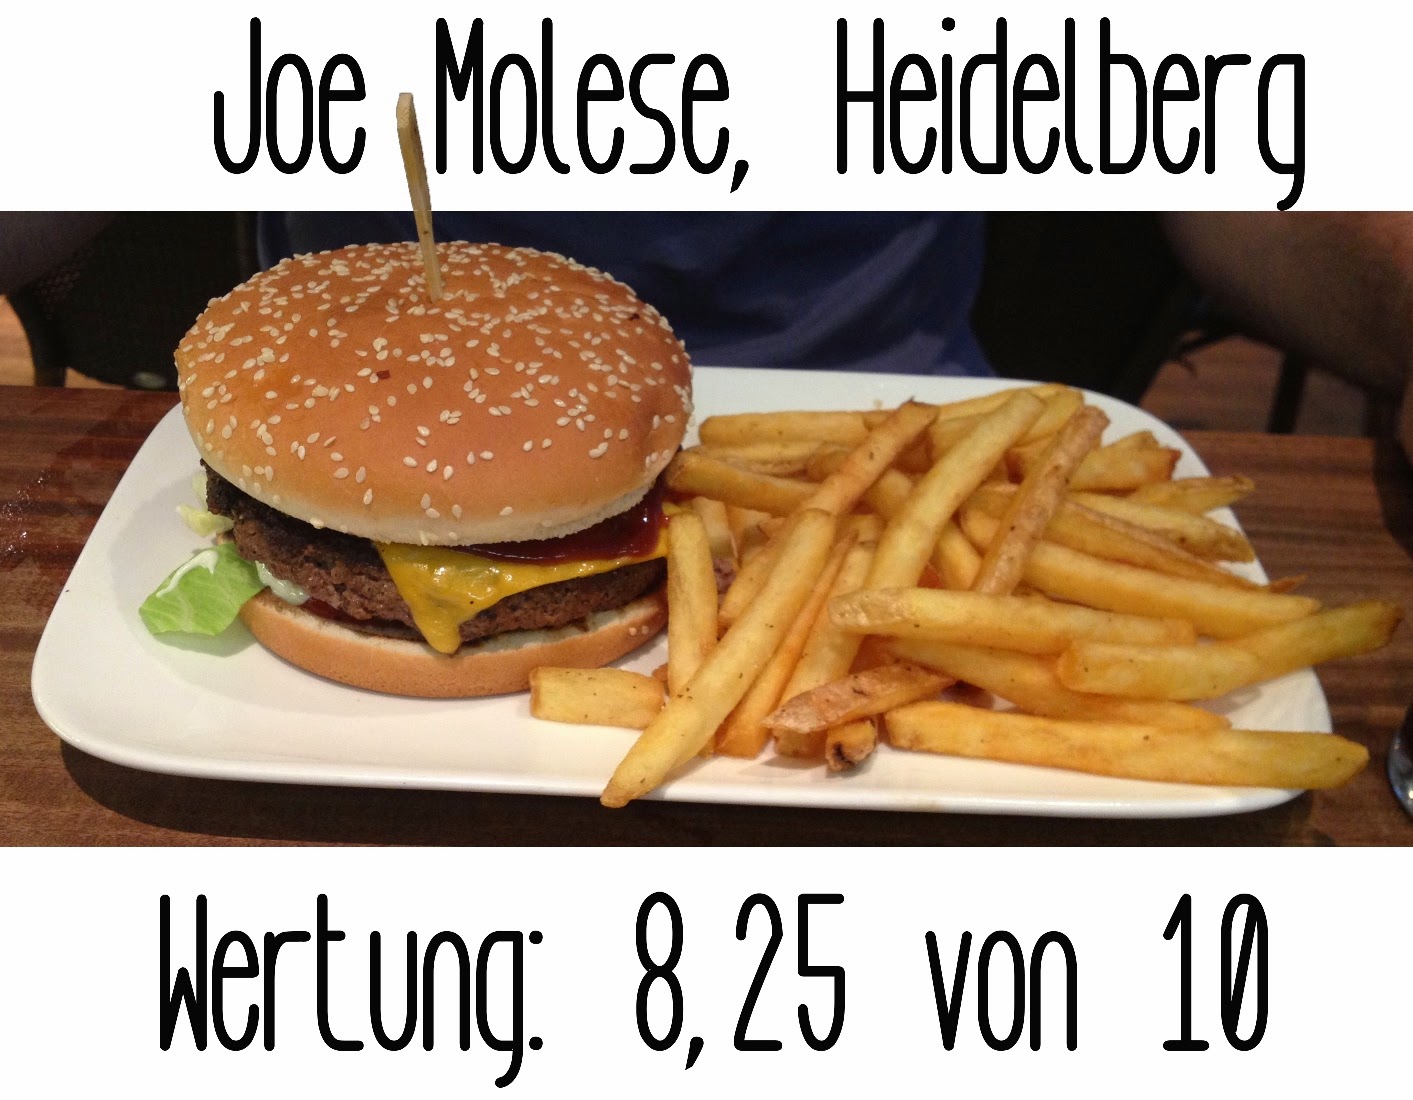 http://germanysbestburger.blogspot.de/2013/04/joe-molese-heidelberg.html